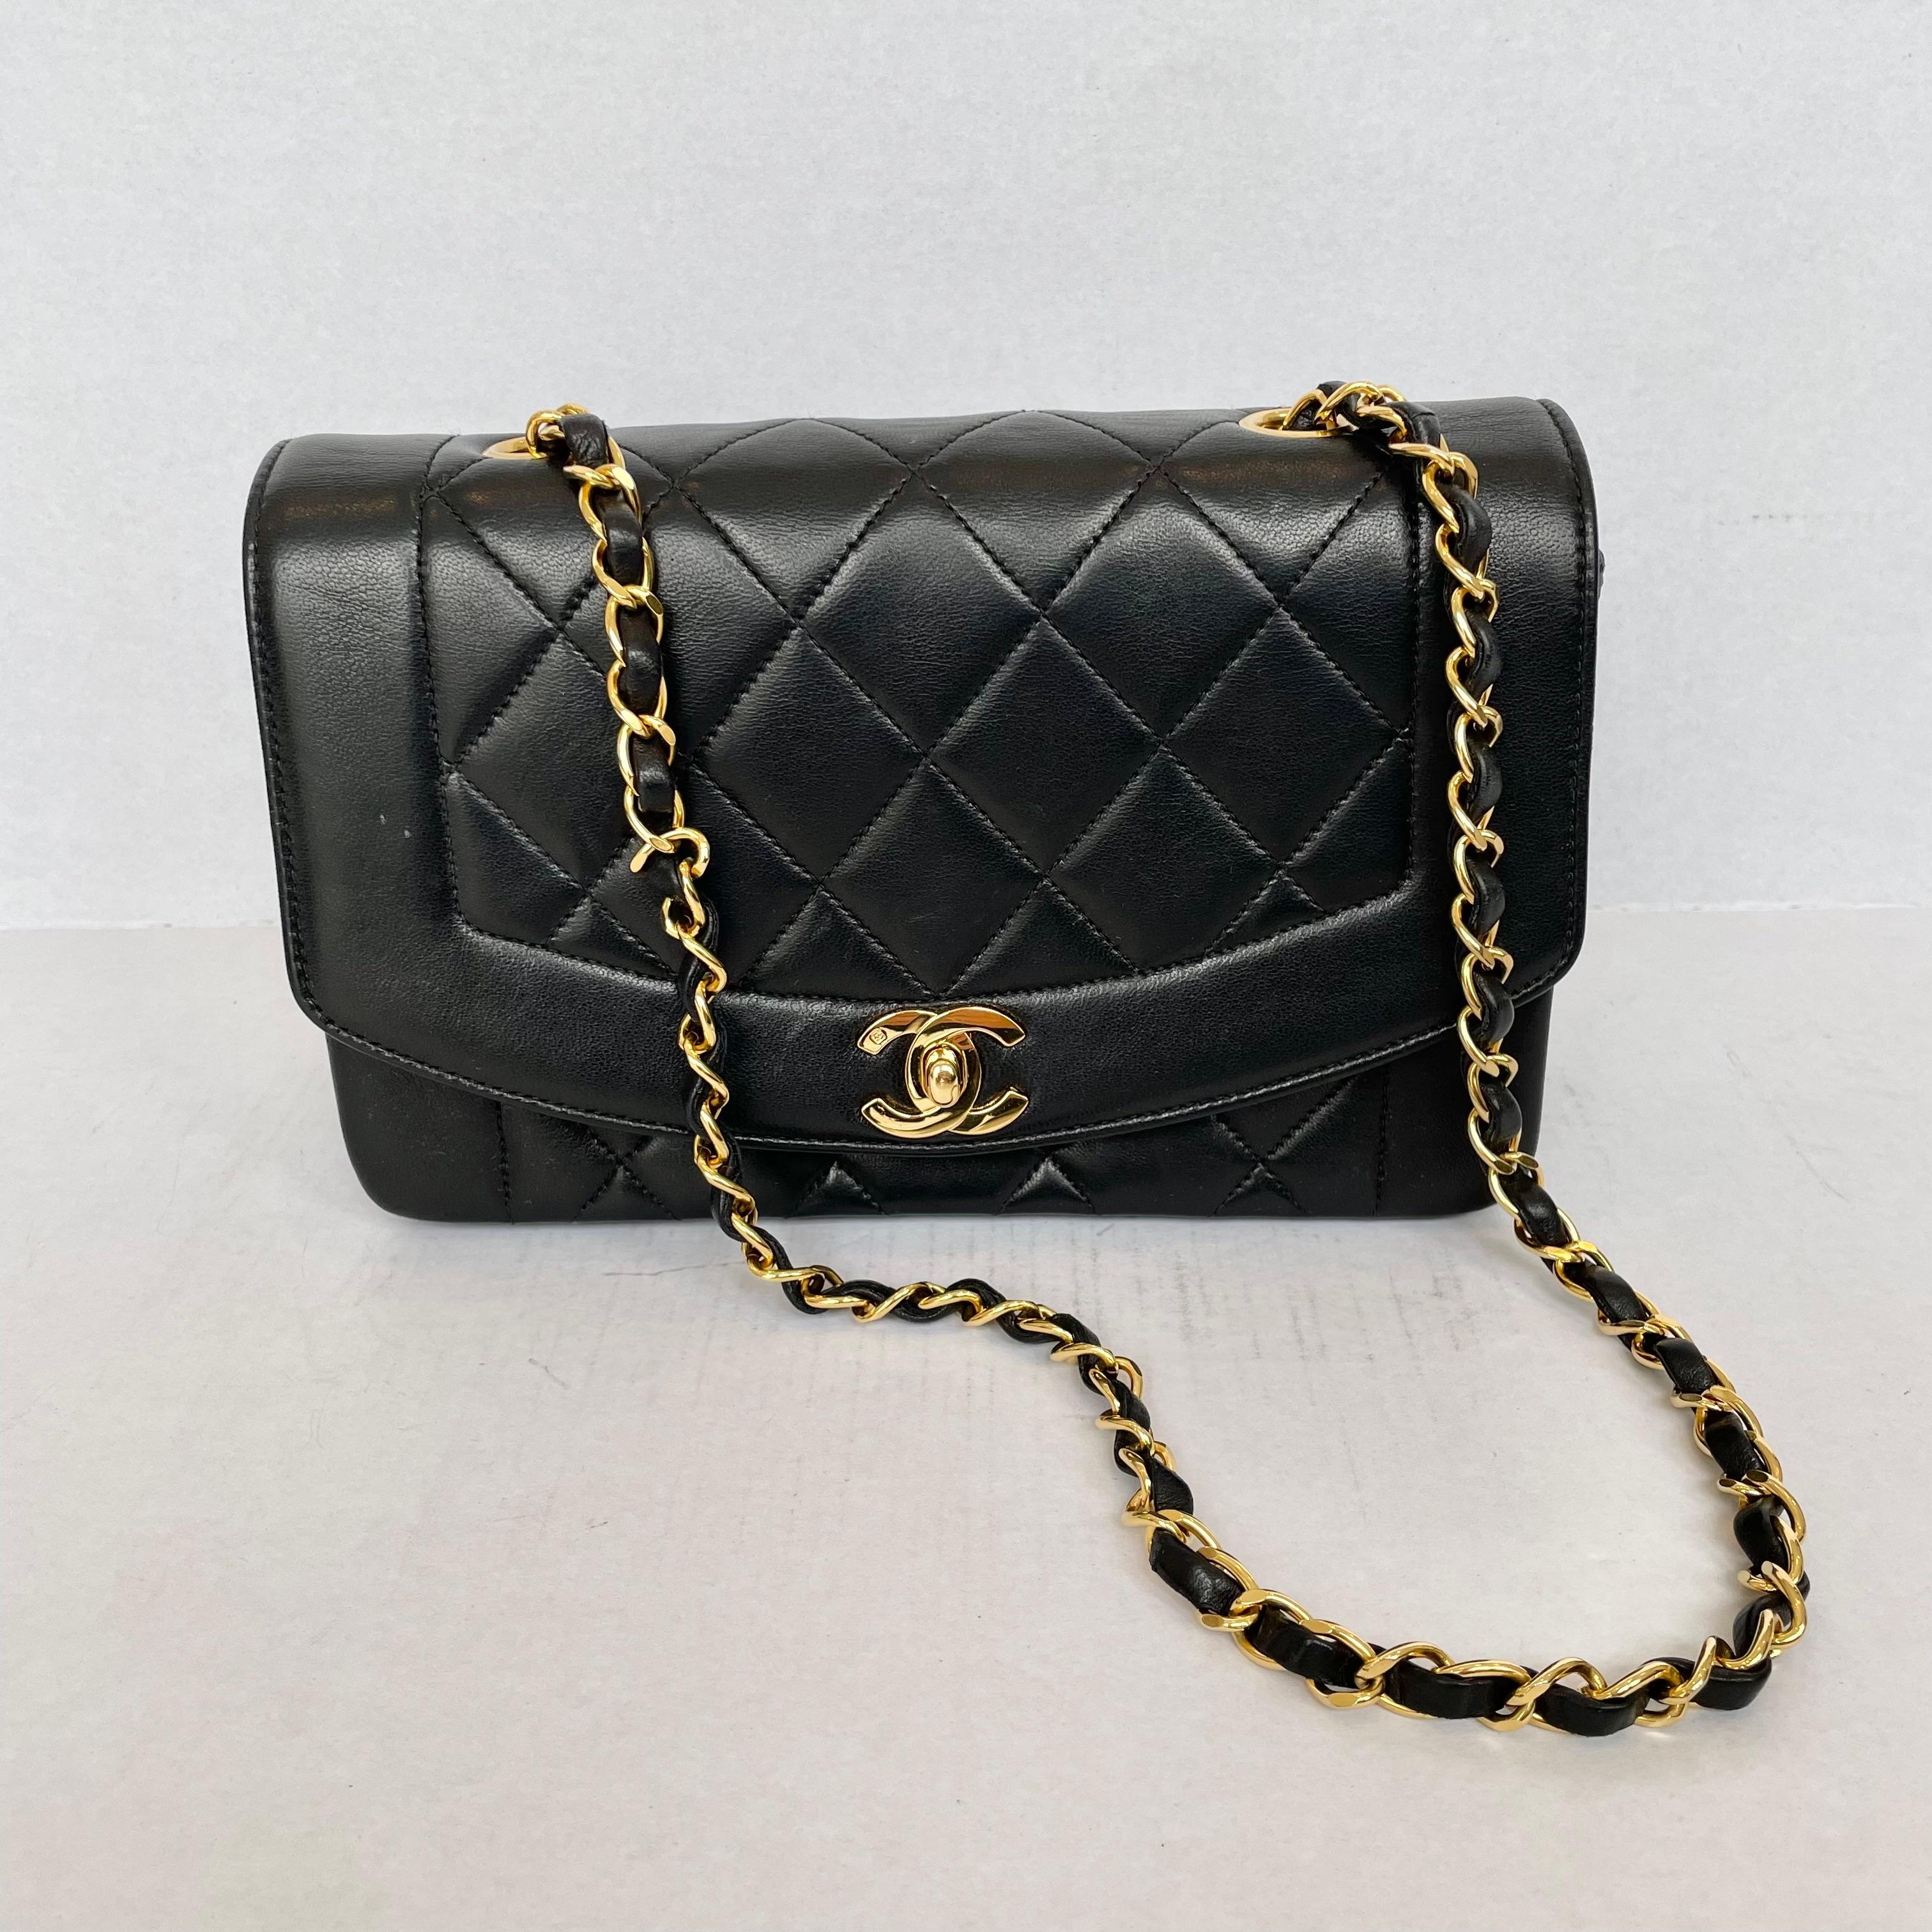 Rare Chanel Diana Shoulder Bag Black Quilted Lambskin Leather, 1990s France For Sale 4